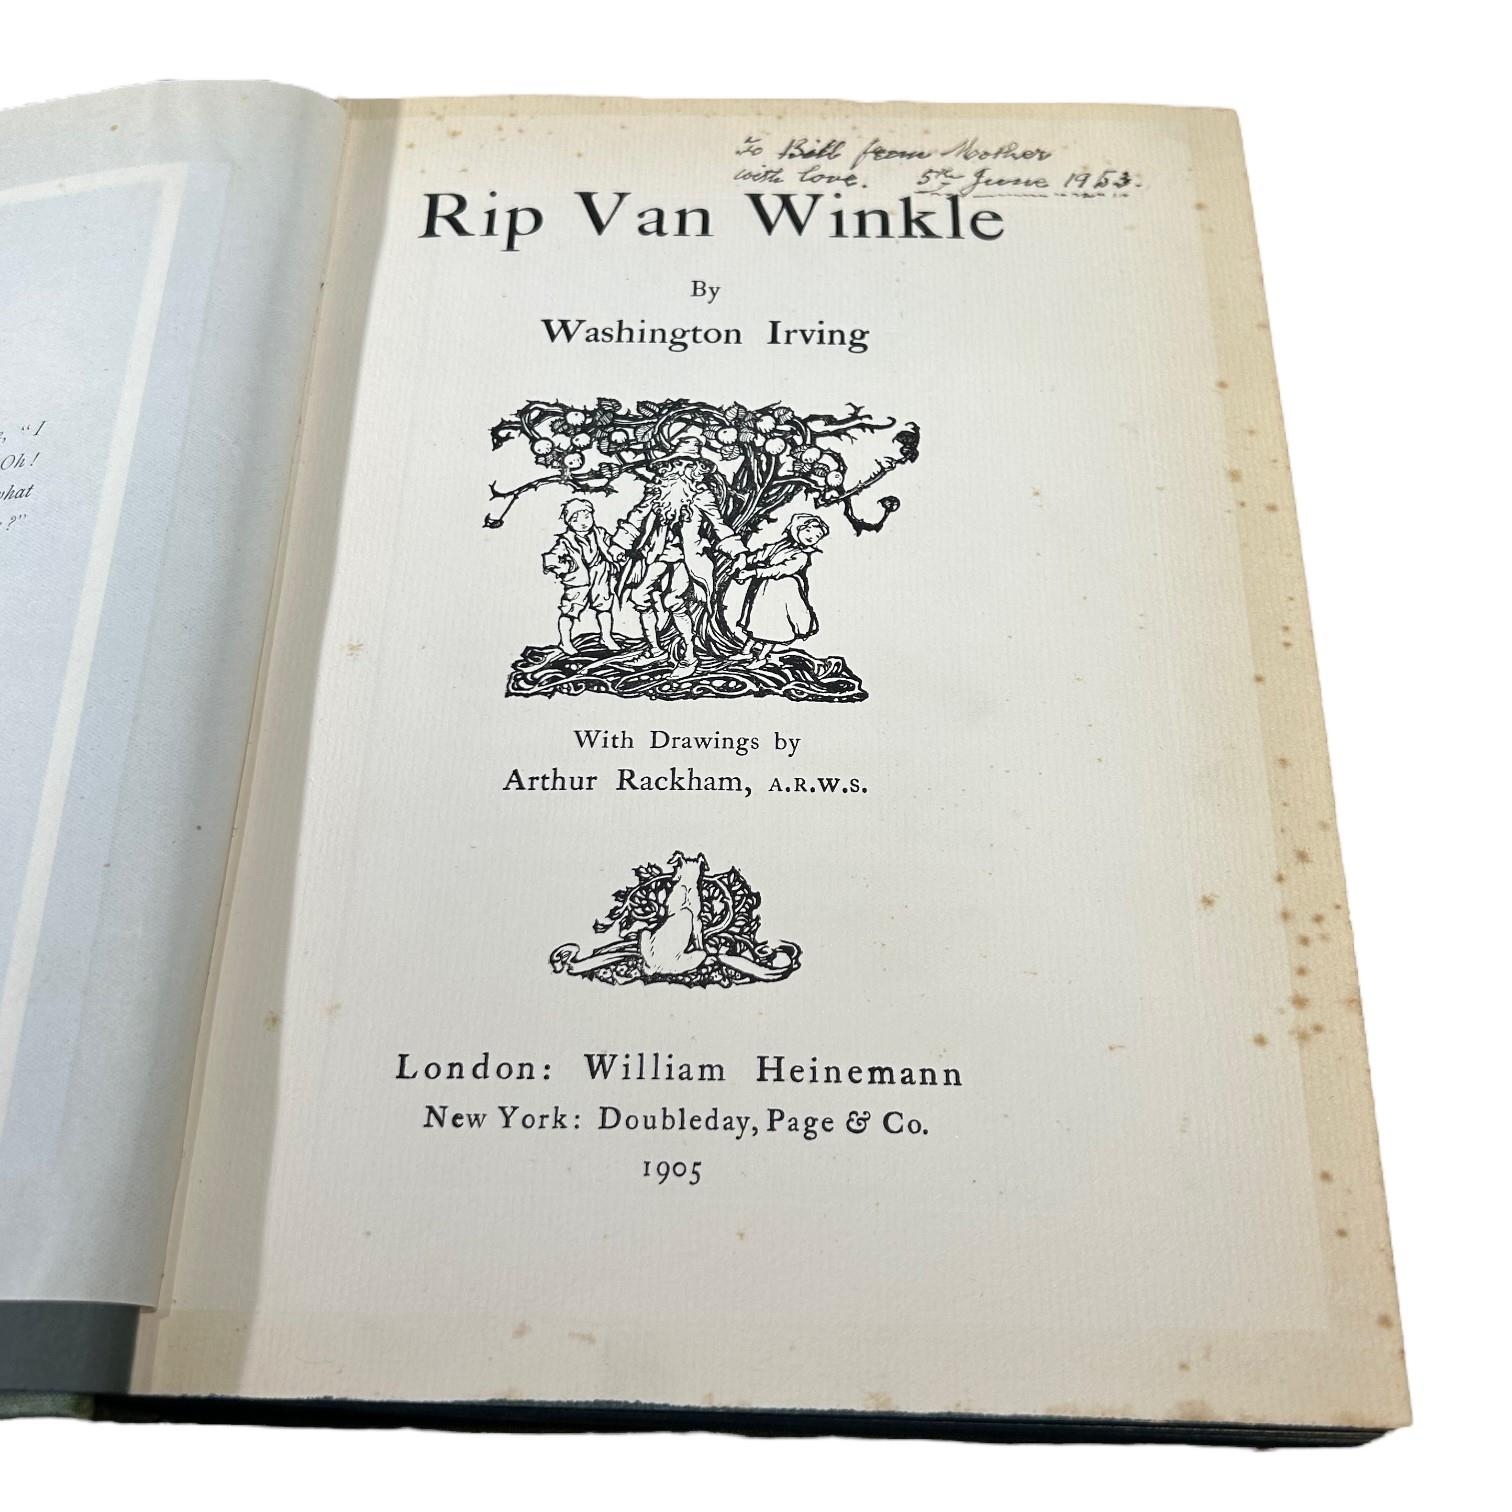 WASHINGTON IRVING, ILLUSTRATED BY ARTHUR RACKHAM. RIP VAN WINKLE BOOK, 2ND IMPRESSION, 1905 - Image 2 of 2